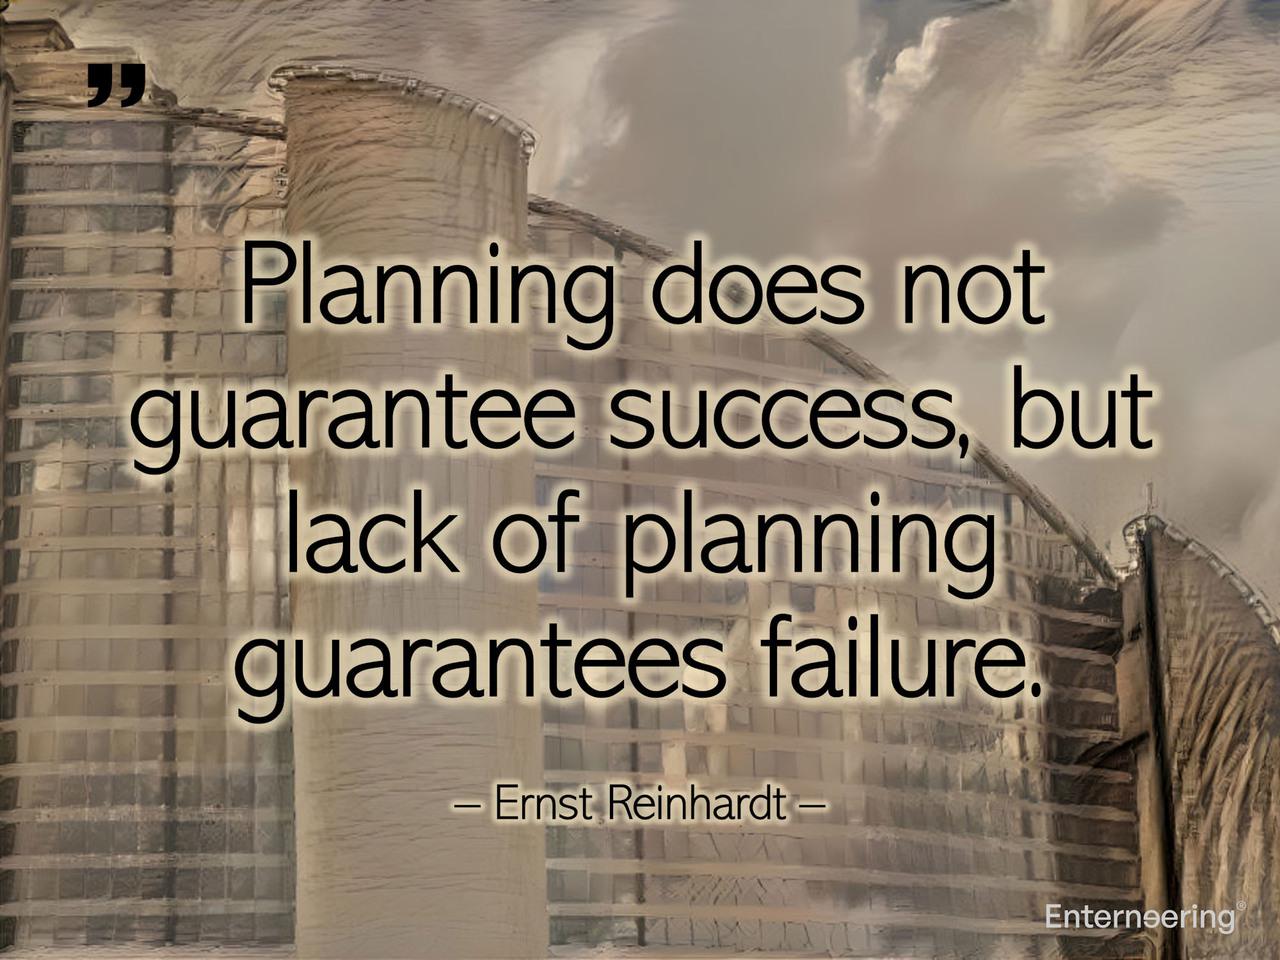 Lack of planning guarantees failure